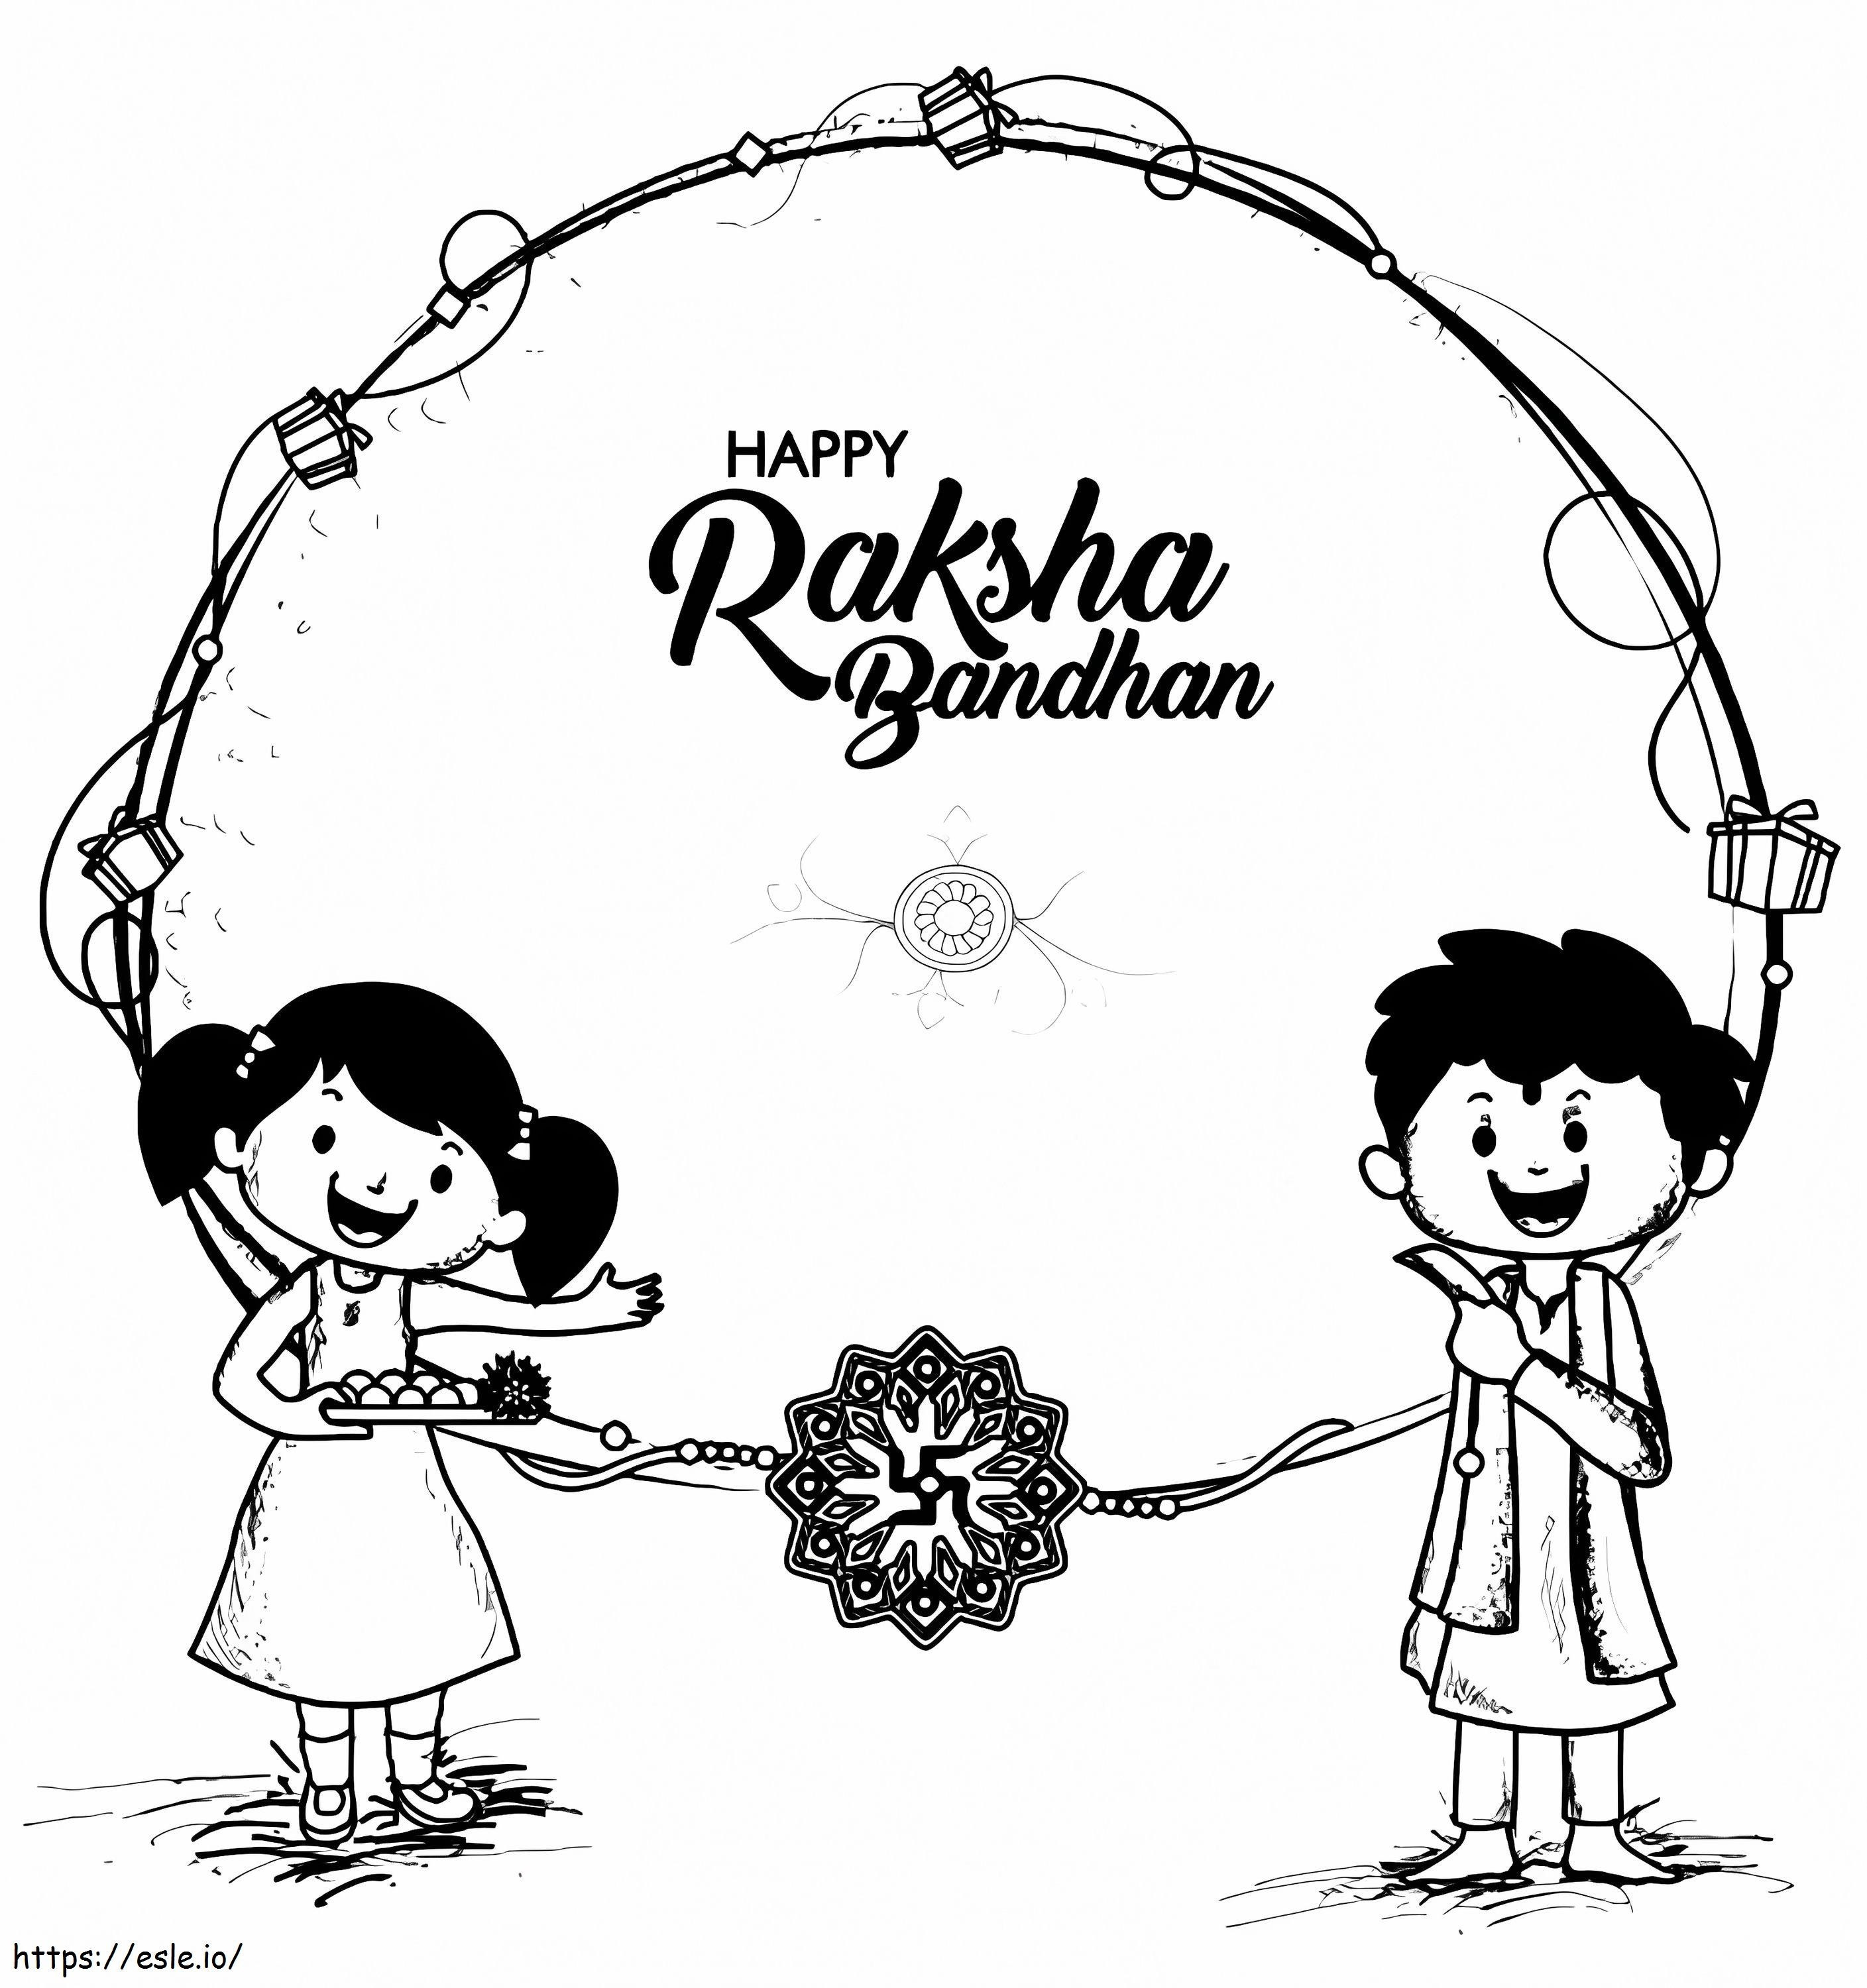 Rasha Bandhan 8 boyama